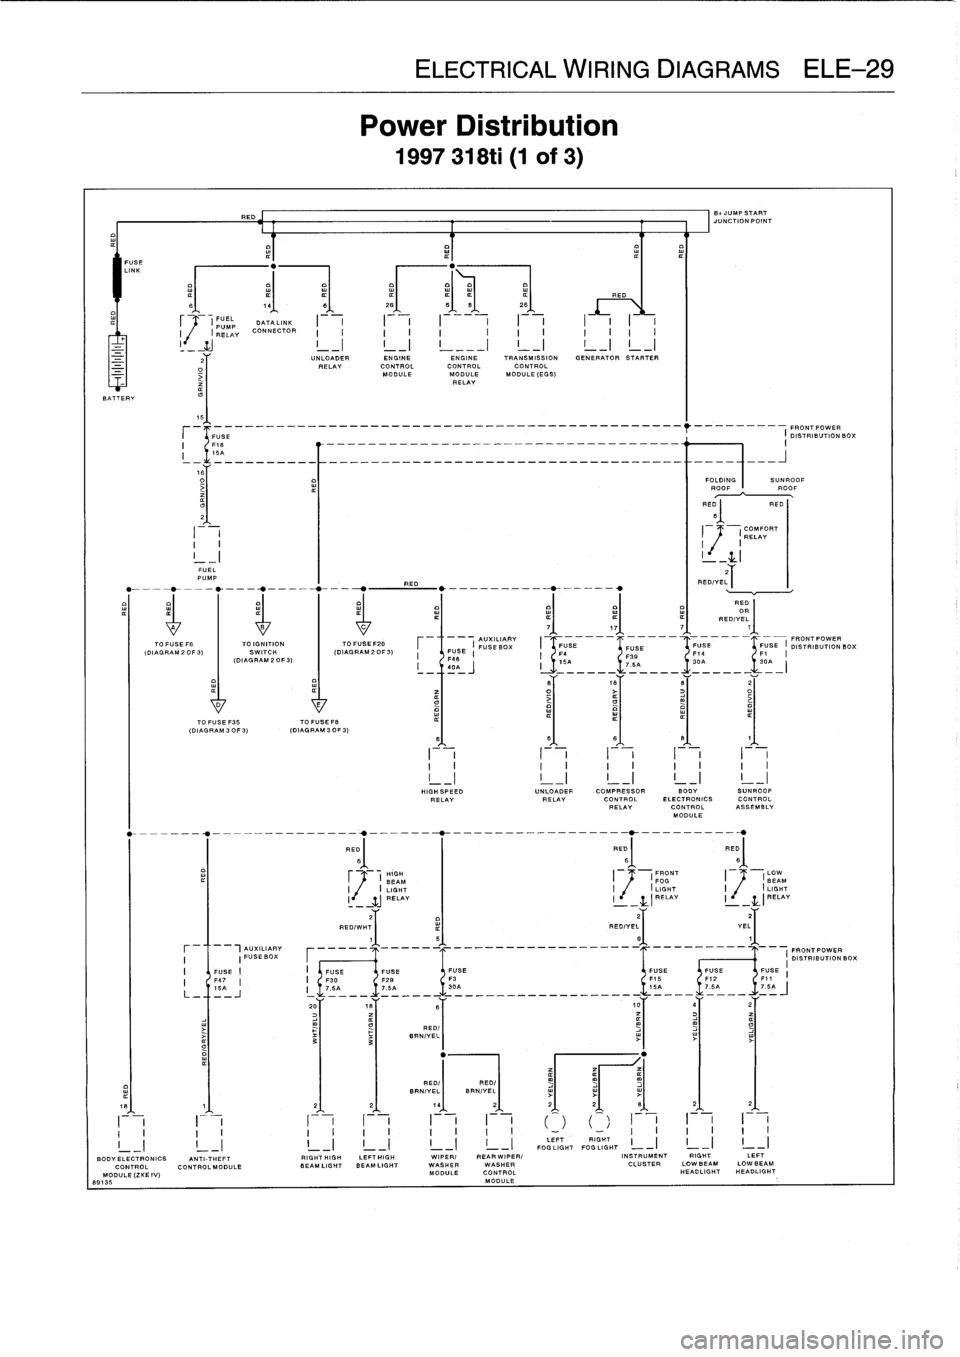 BMW M3 1994 E36 Service Manual 
FUSE
LINK

I
IRELAY
CONNECTOR
O
-
z
BATTERY

TO
FUSE
F6
(DIAGRAM
2
OF
3)

FUEL
PUMP

I
-
1
I
--
,I

	

I

	

I

	

I
_I
LI
BODY
ELECTRONICS

	

ANTI-THEFT
CONTROL
CONTROLMODULEMODULE
(ZKE
IV)
80135

